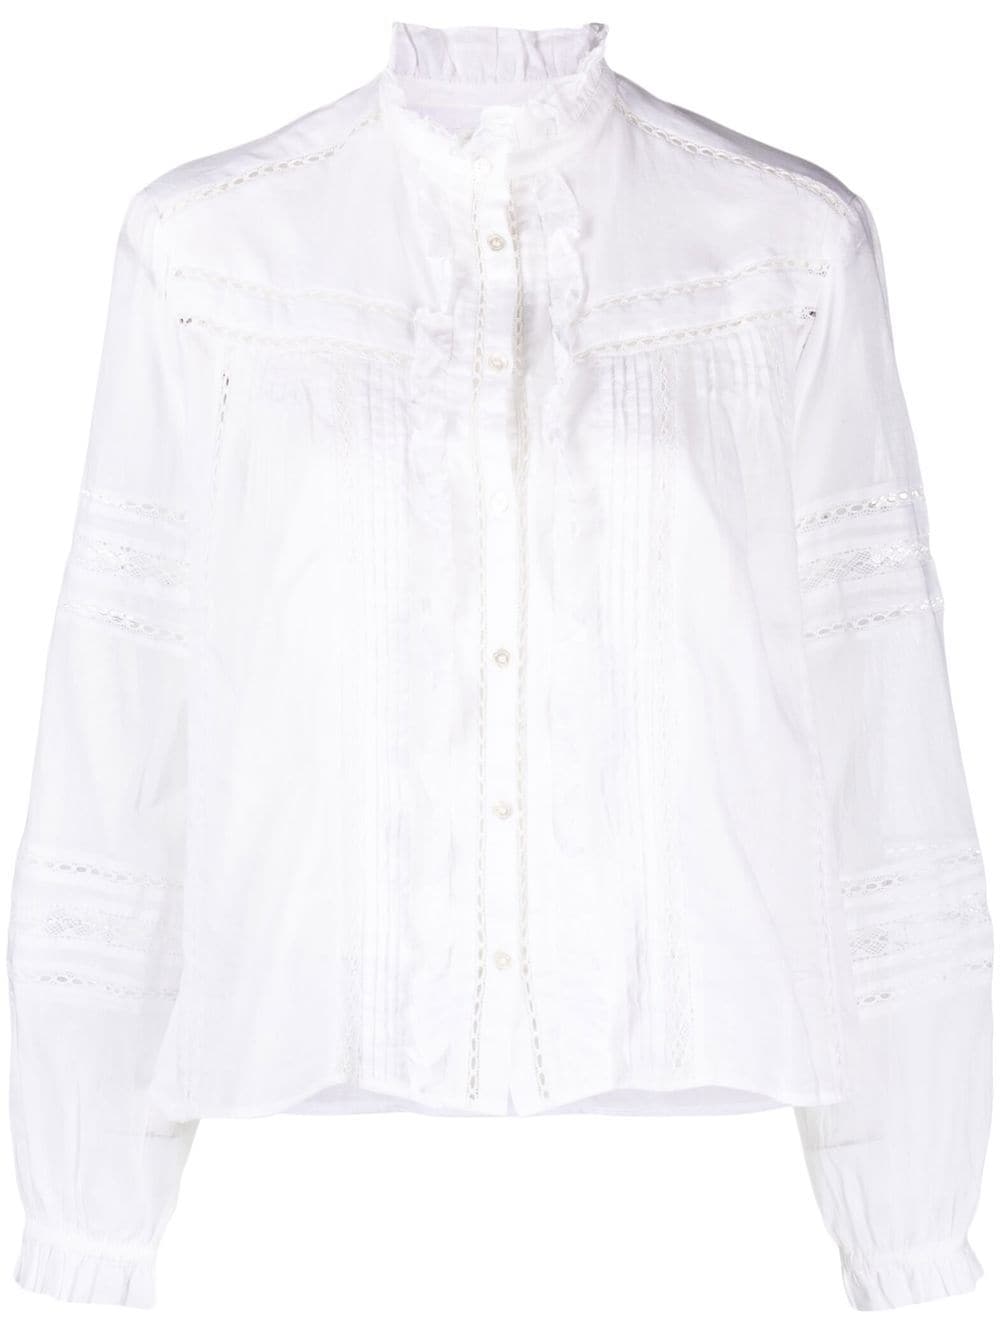 MARANT ÉTOILE semi-sheer shirt - White von MARANT ÉTOILE